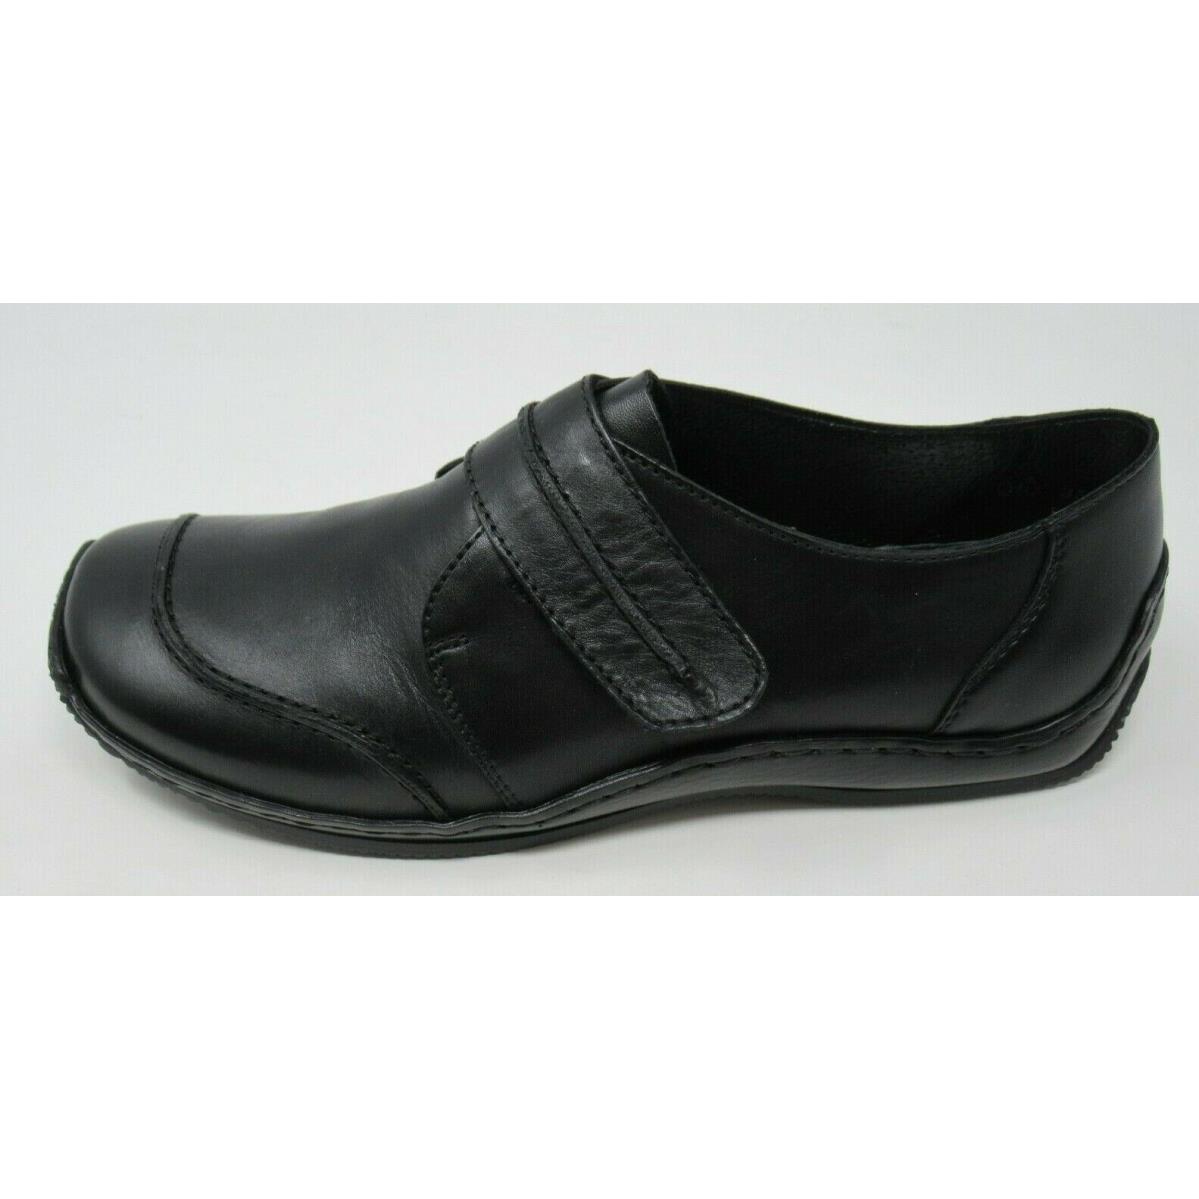 Rieker Women`s L1760 Black Lea. Hook Loop Closure Loafers Shoes Eur 36 US 5.5